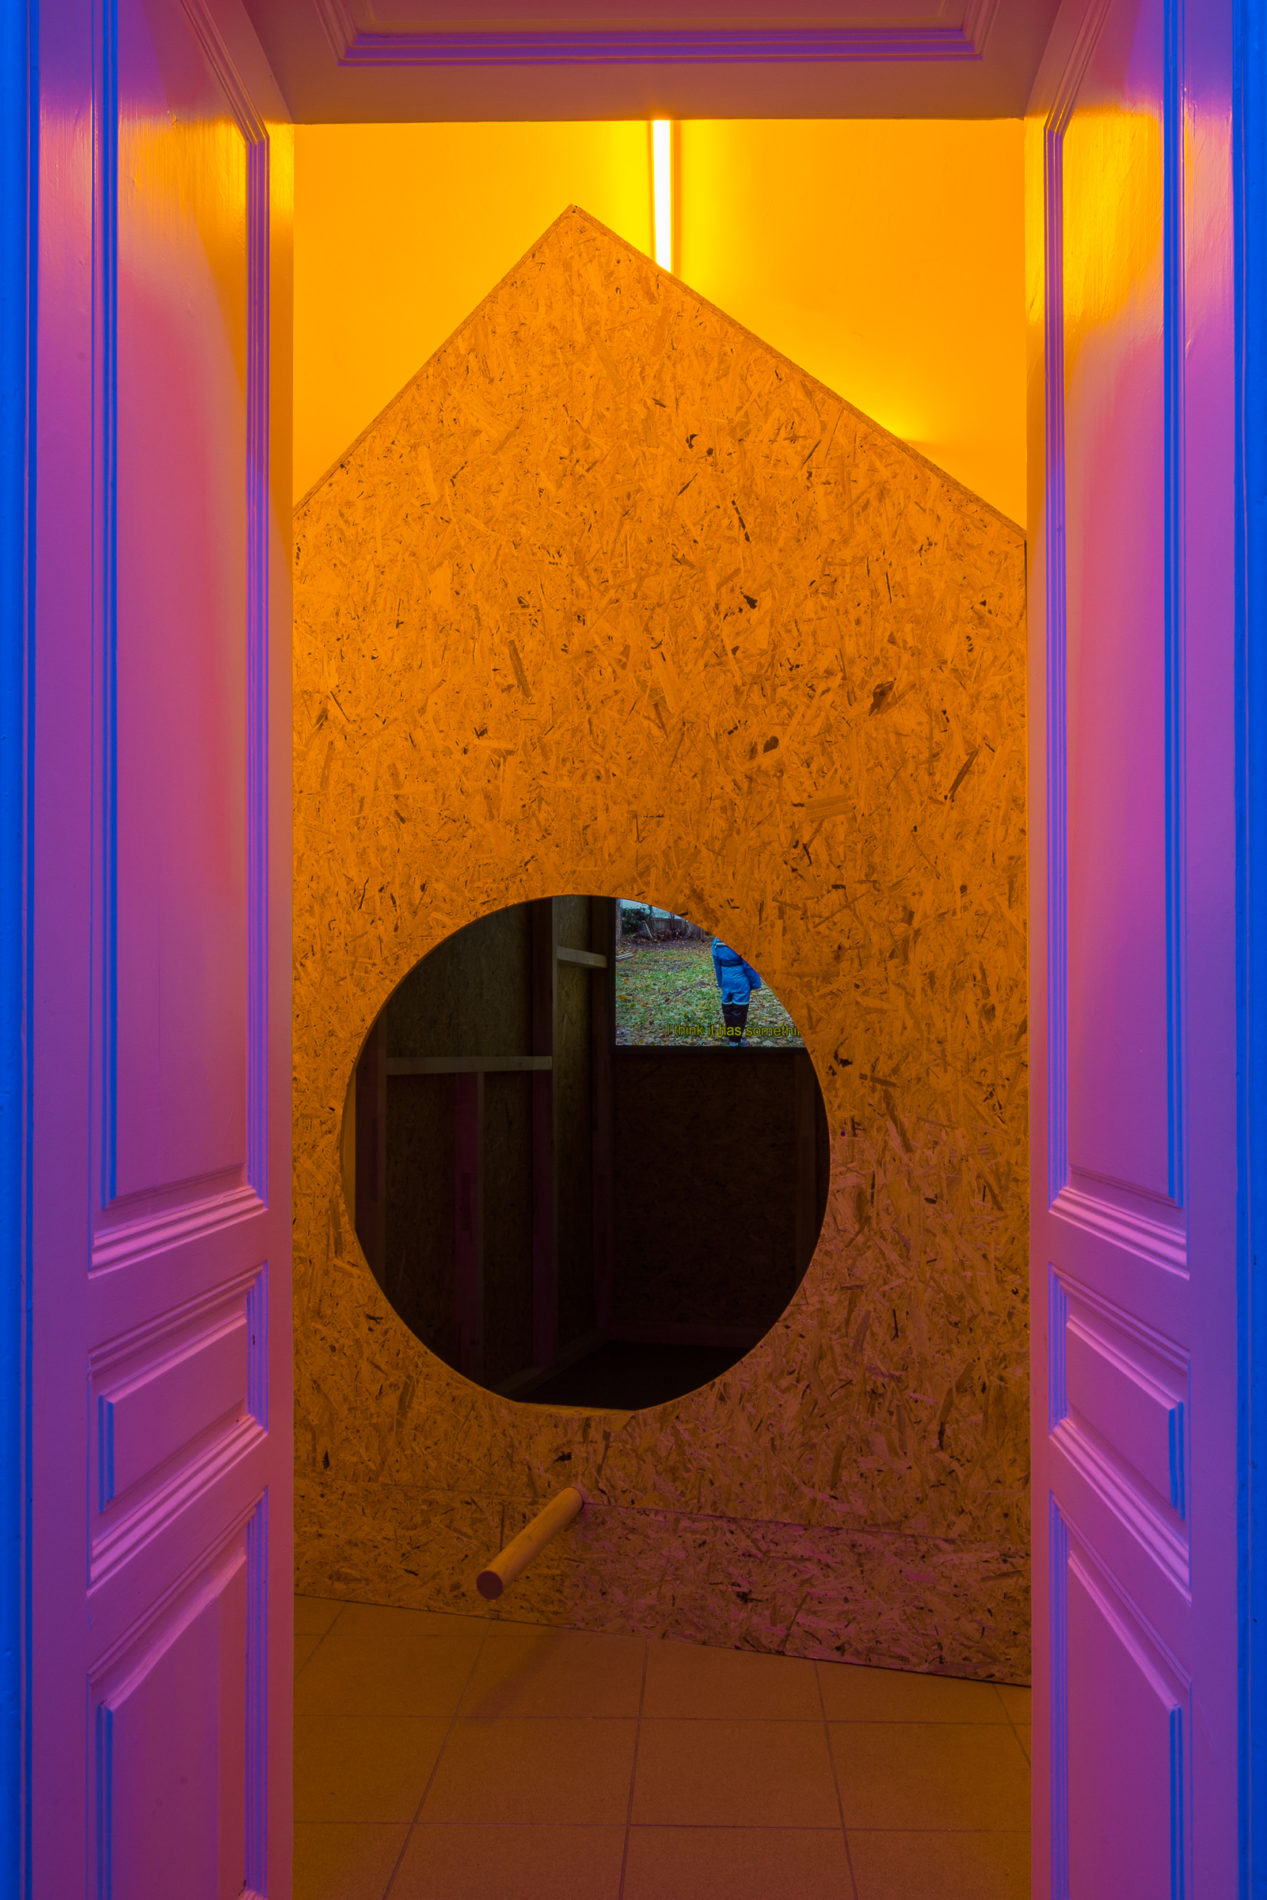 orange triangular structure within purple paneled room with orange backlights